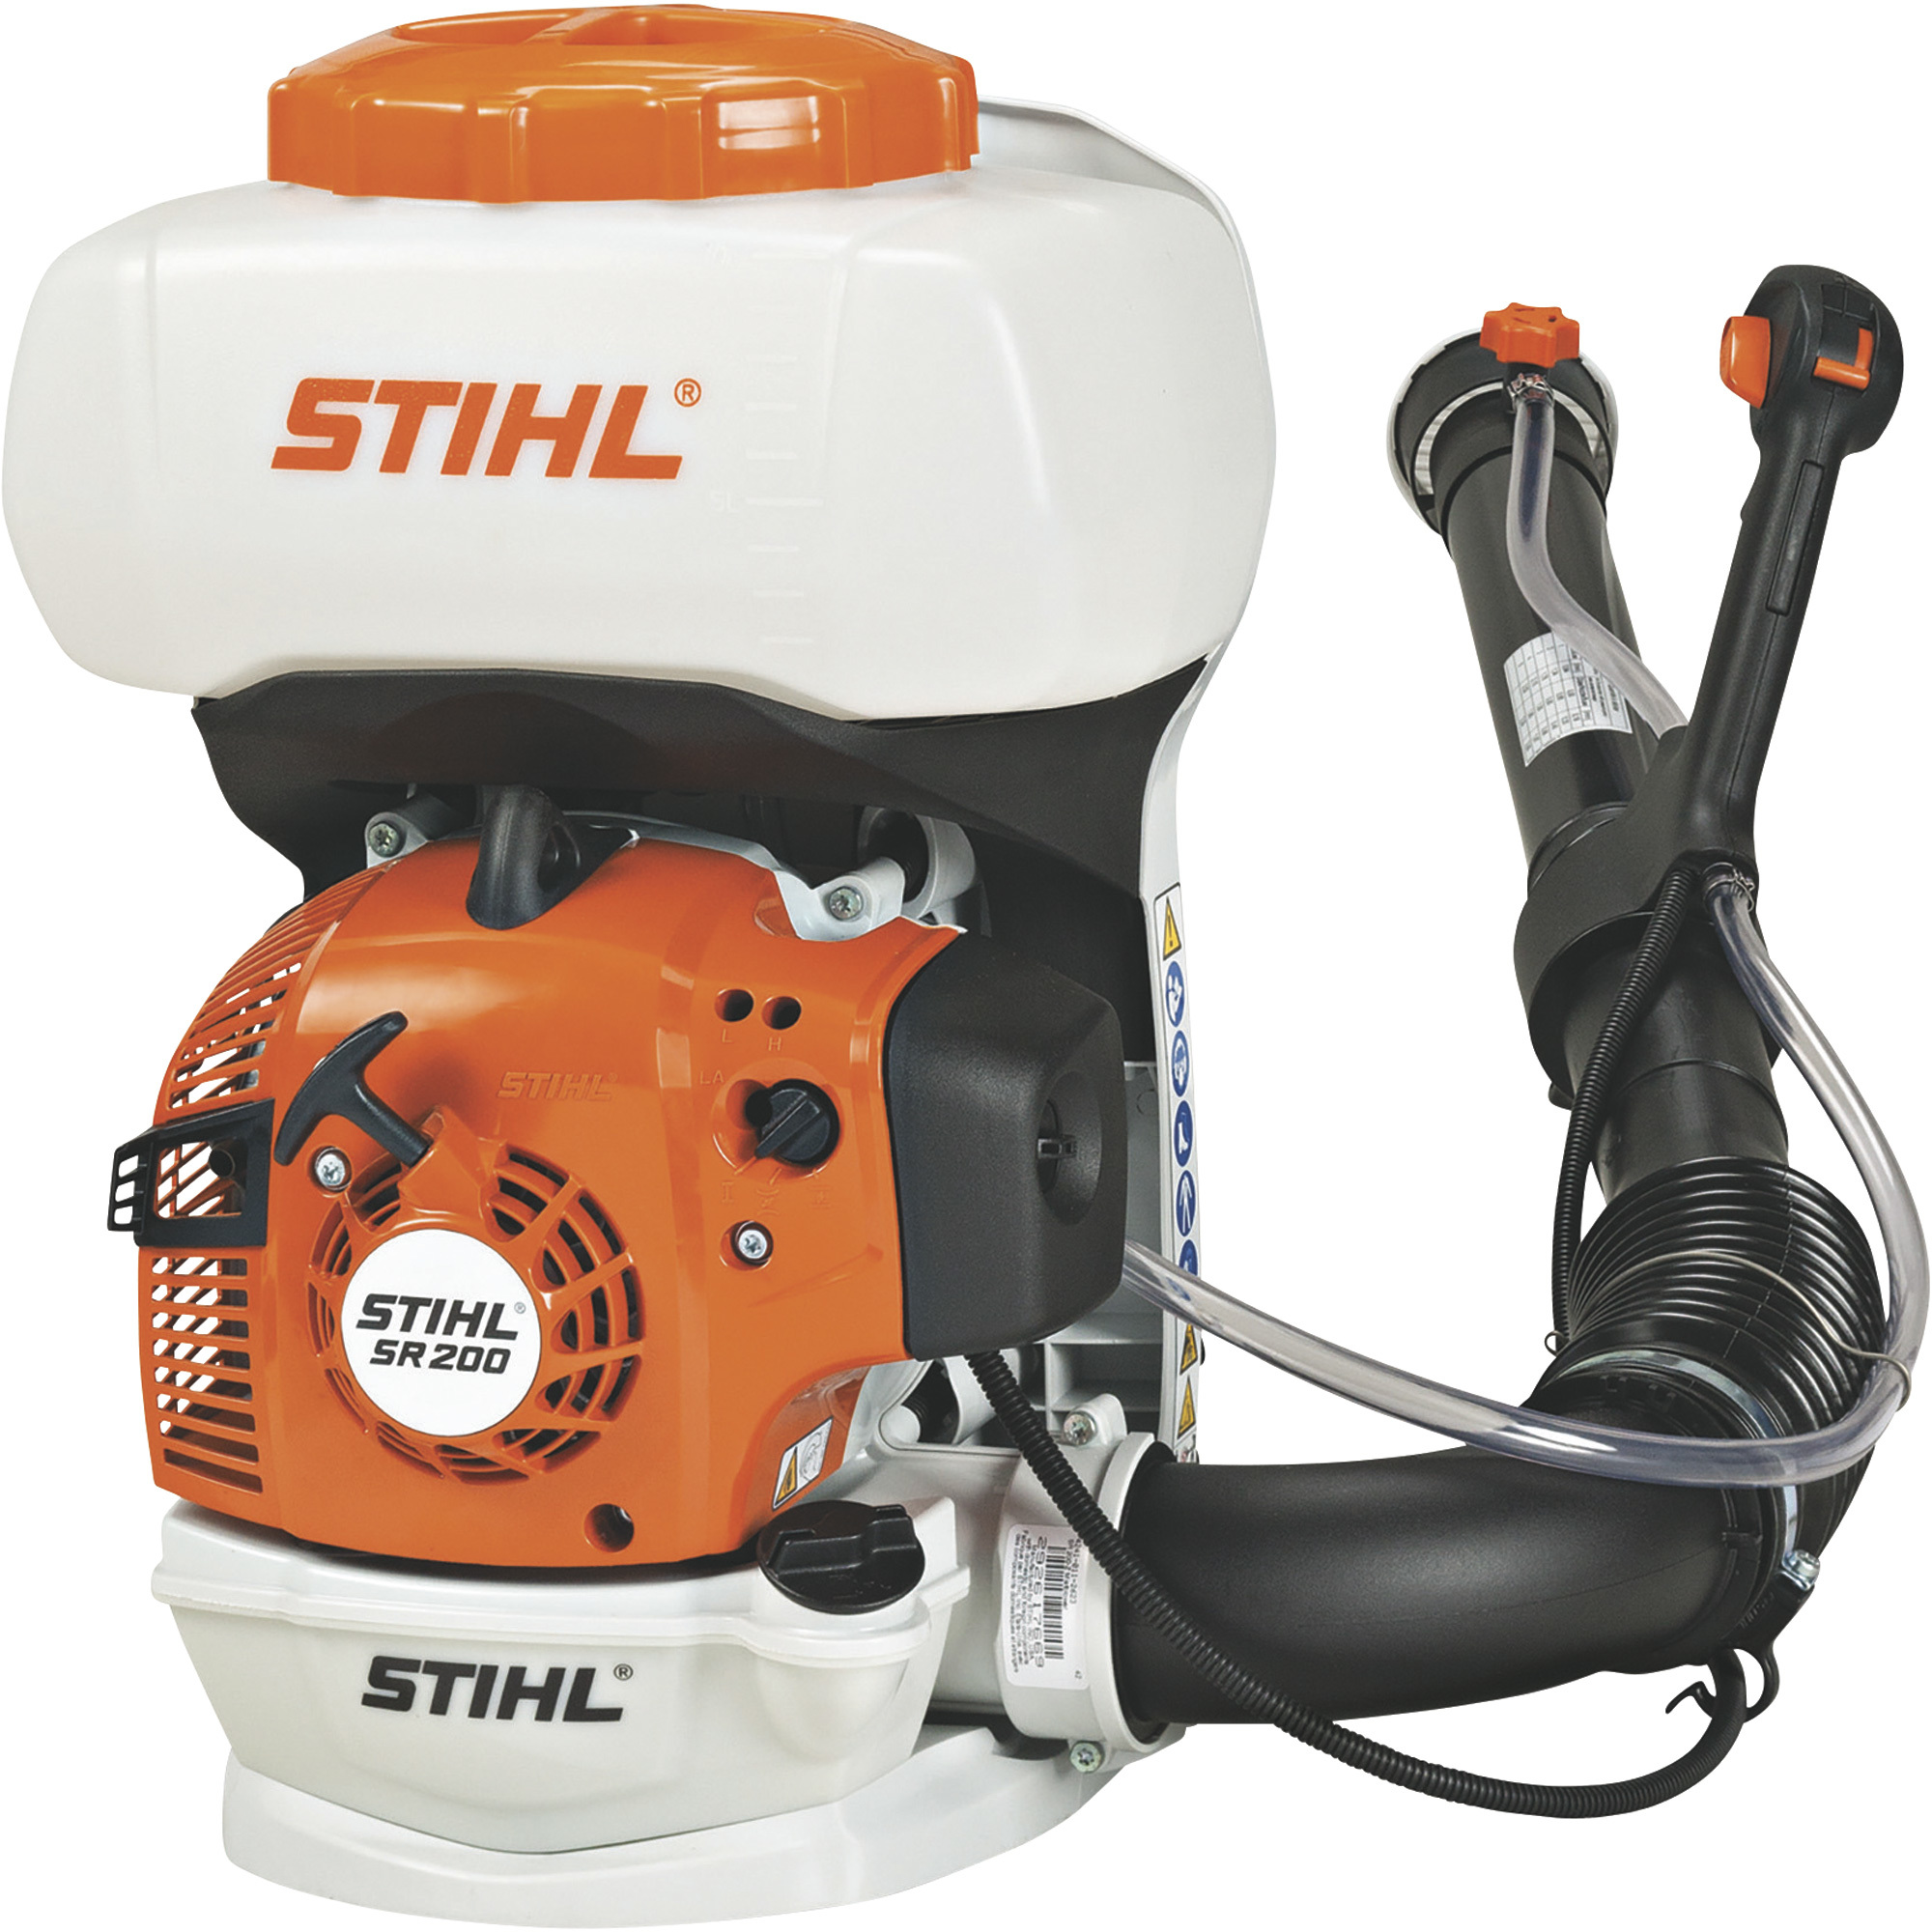 Stihl Gas-Powered Portable Backpack Sprayer â 2.1-Gallon Capacity, 27.2cc, Model SR 200